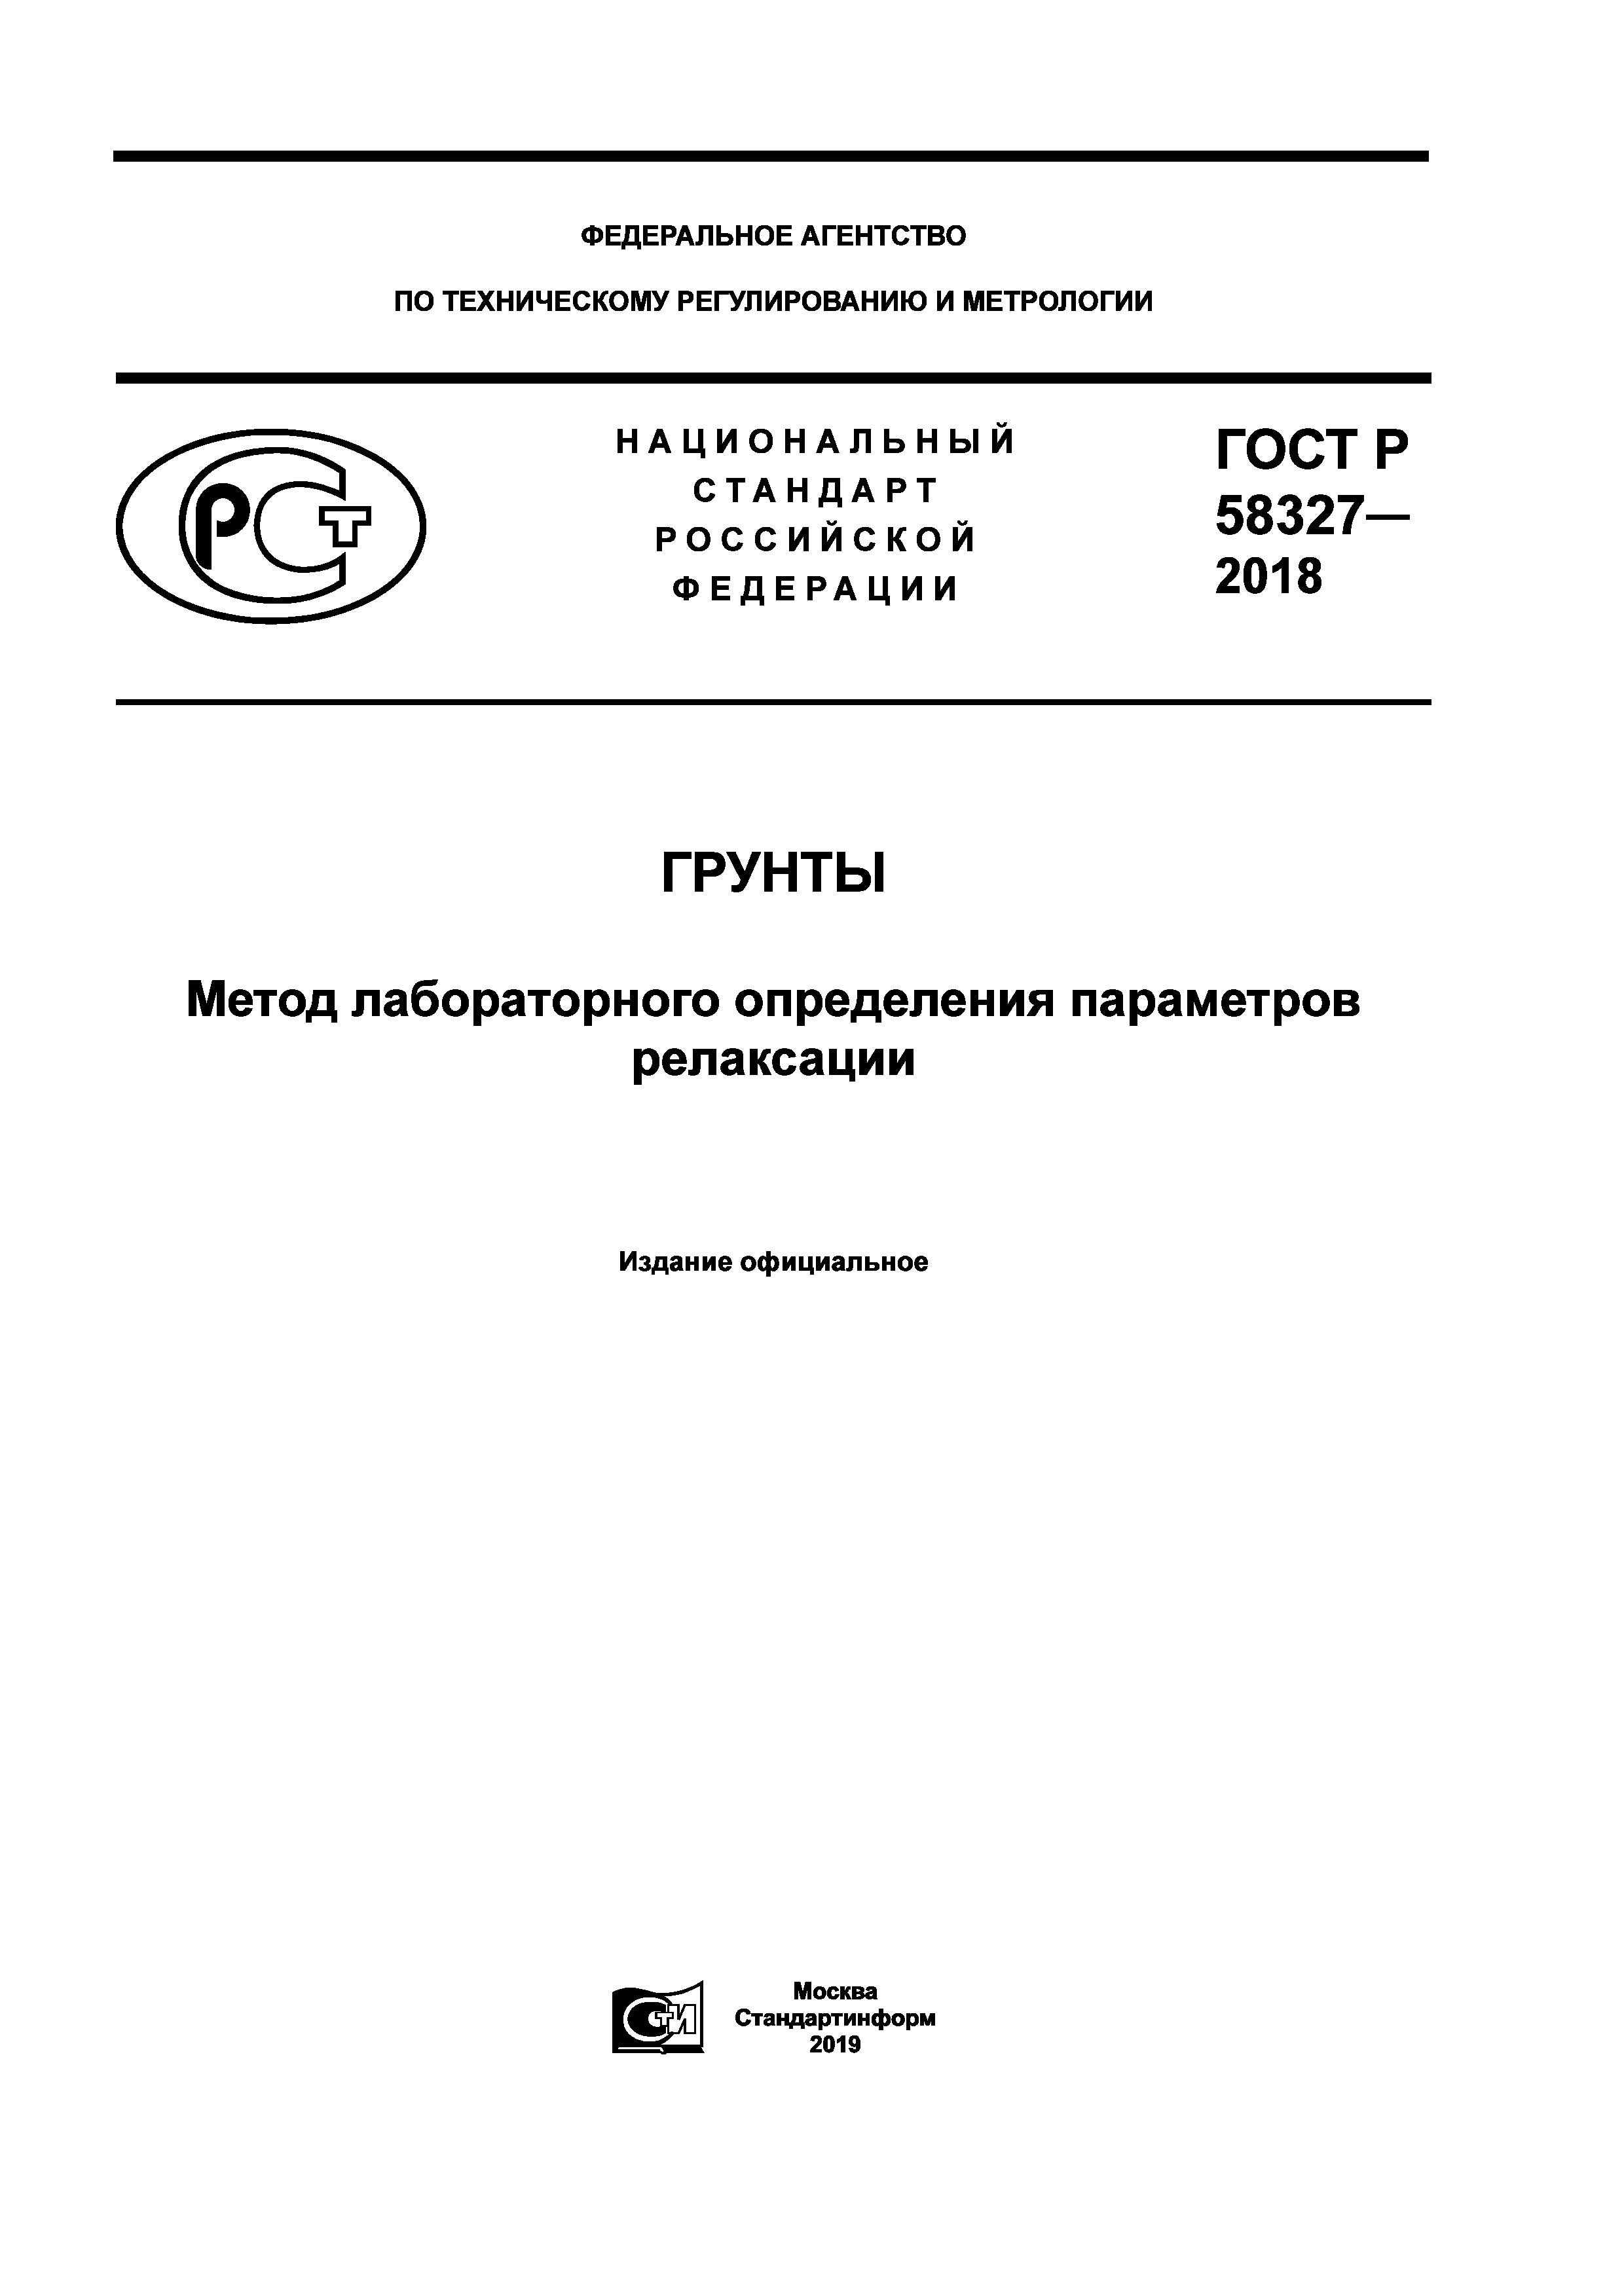 ГОСТ Р 58327-2018